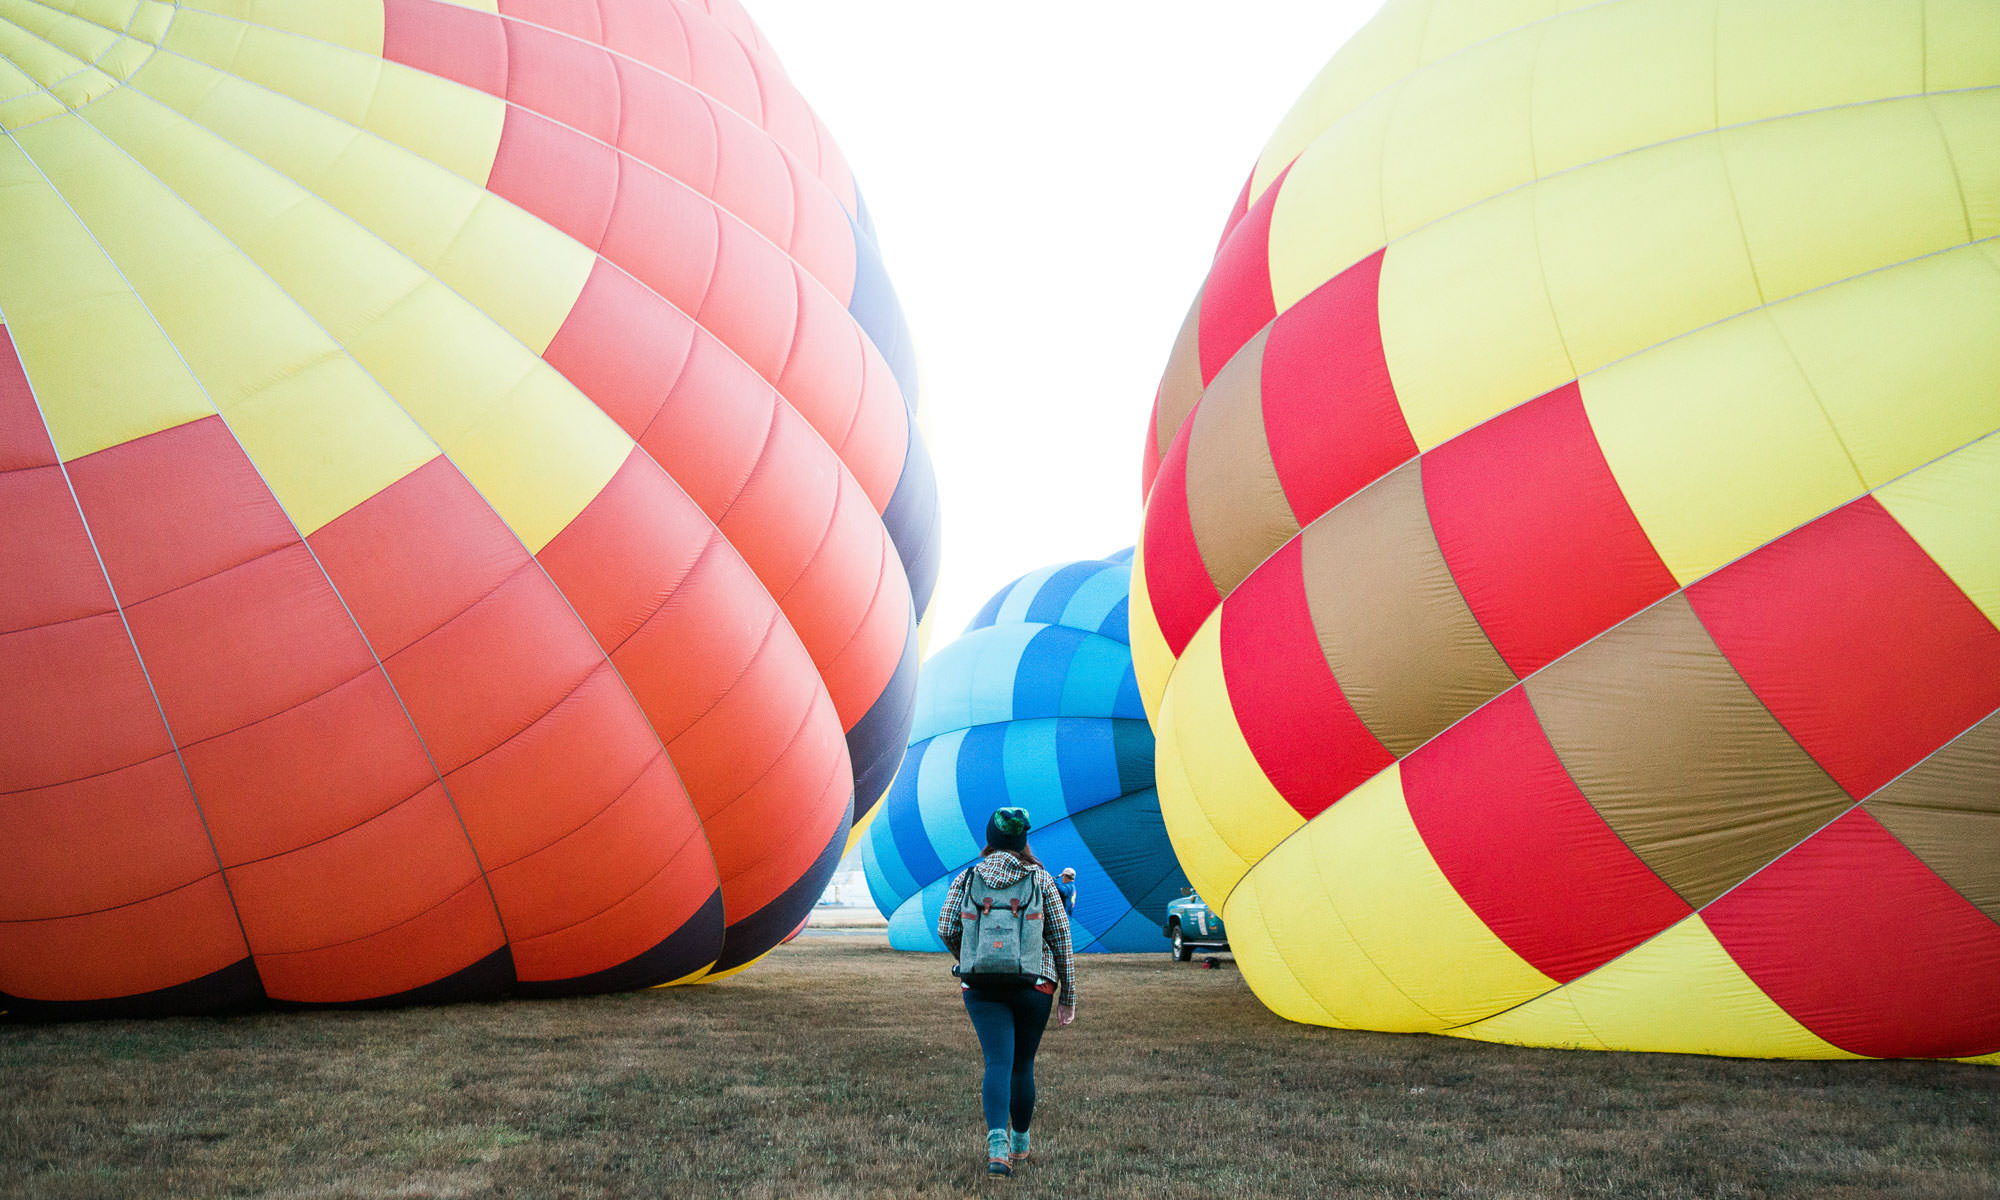 A girl walks between two deflated hot air balloons.